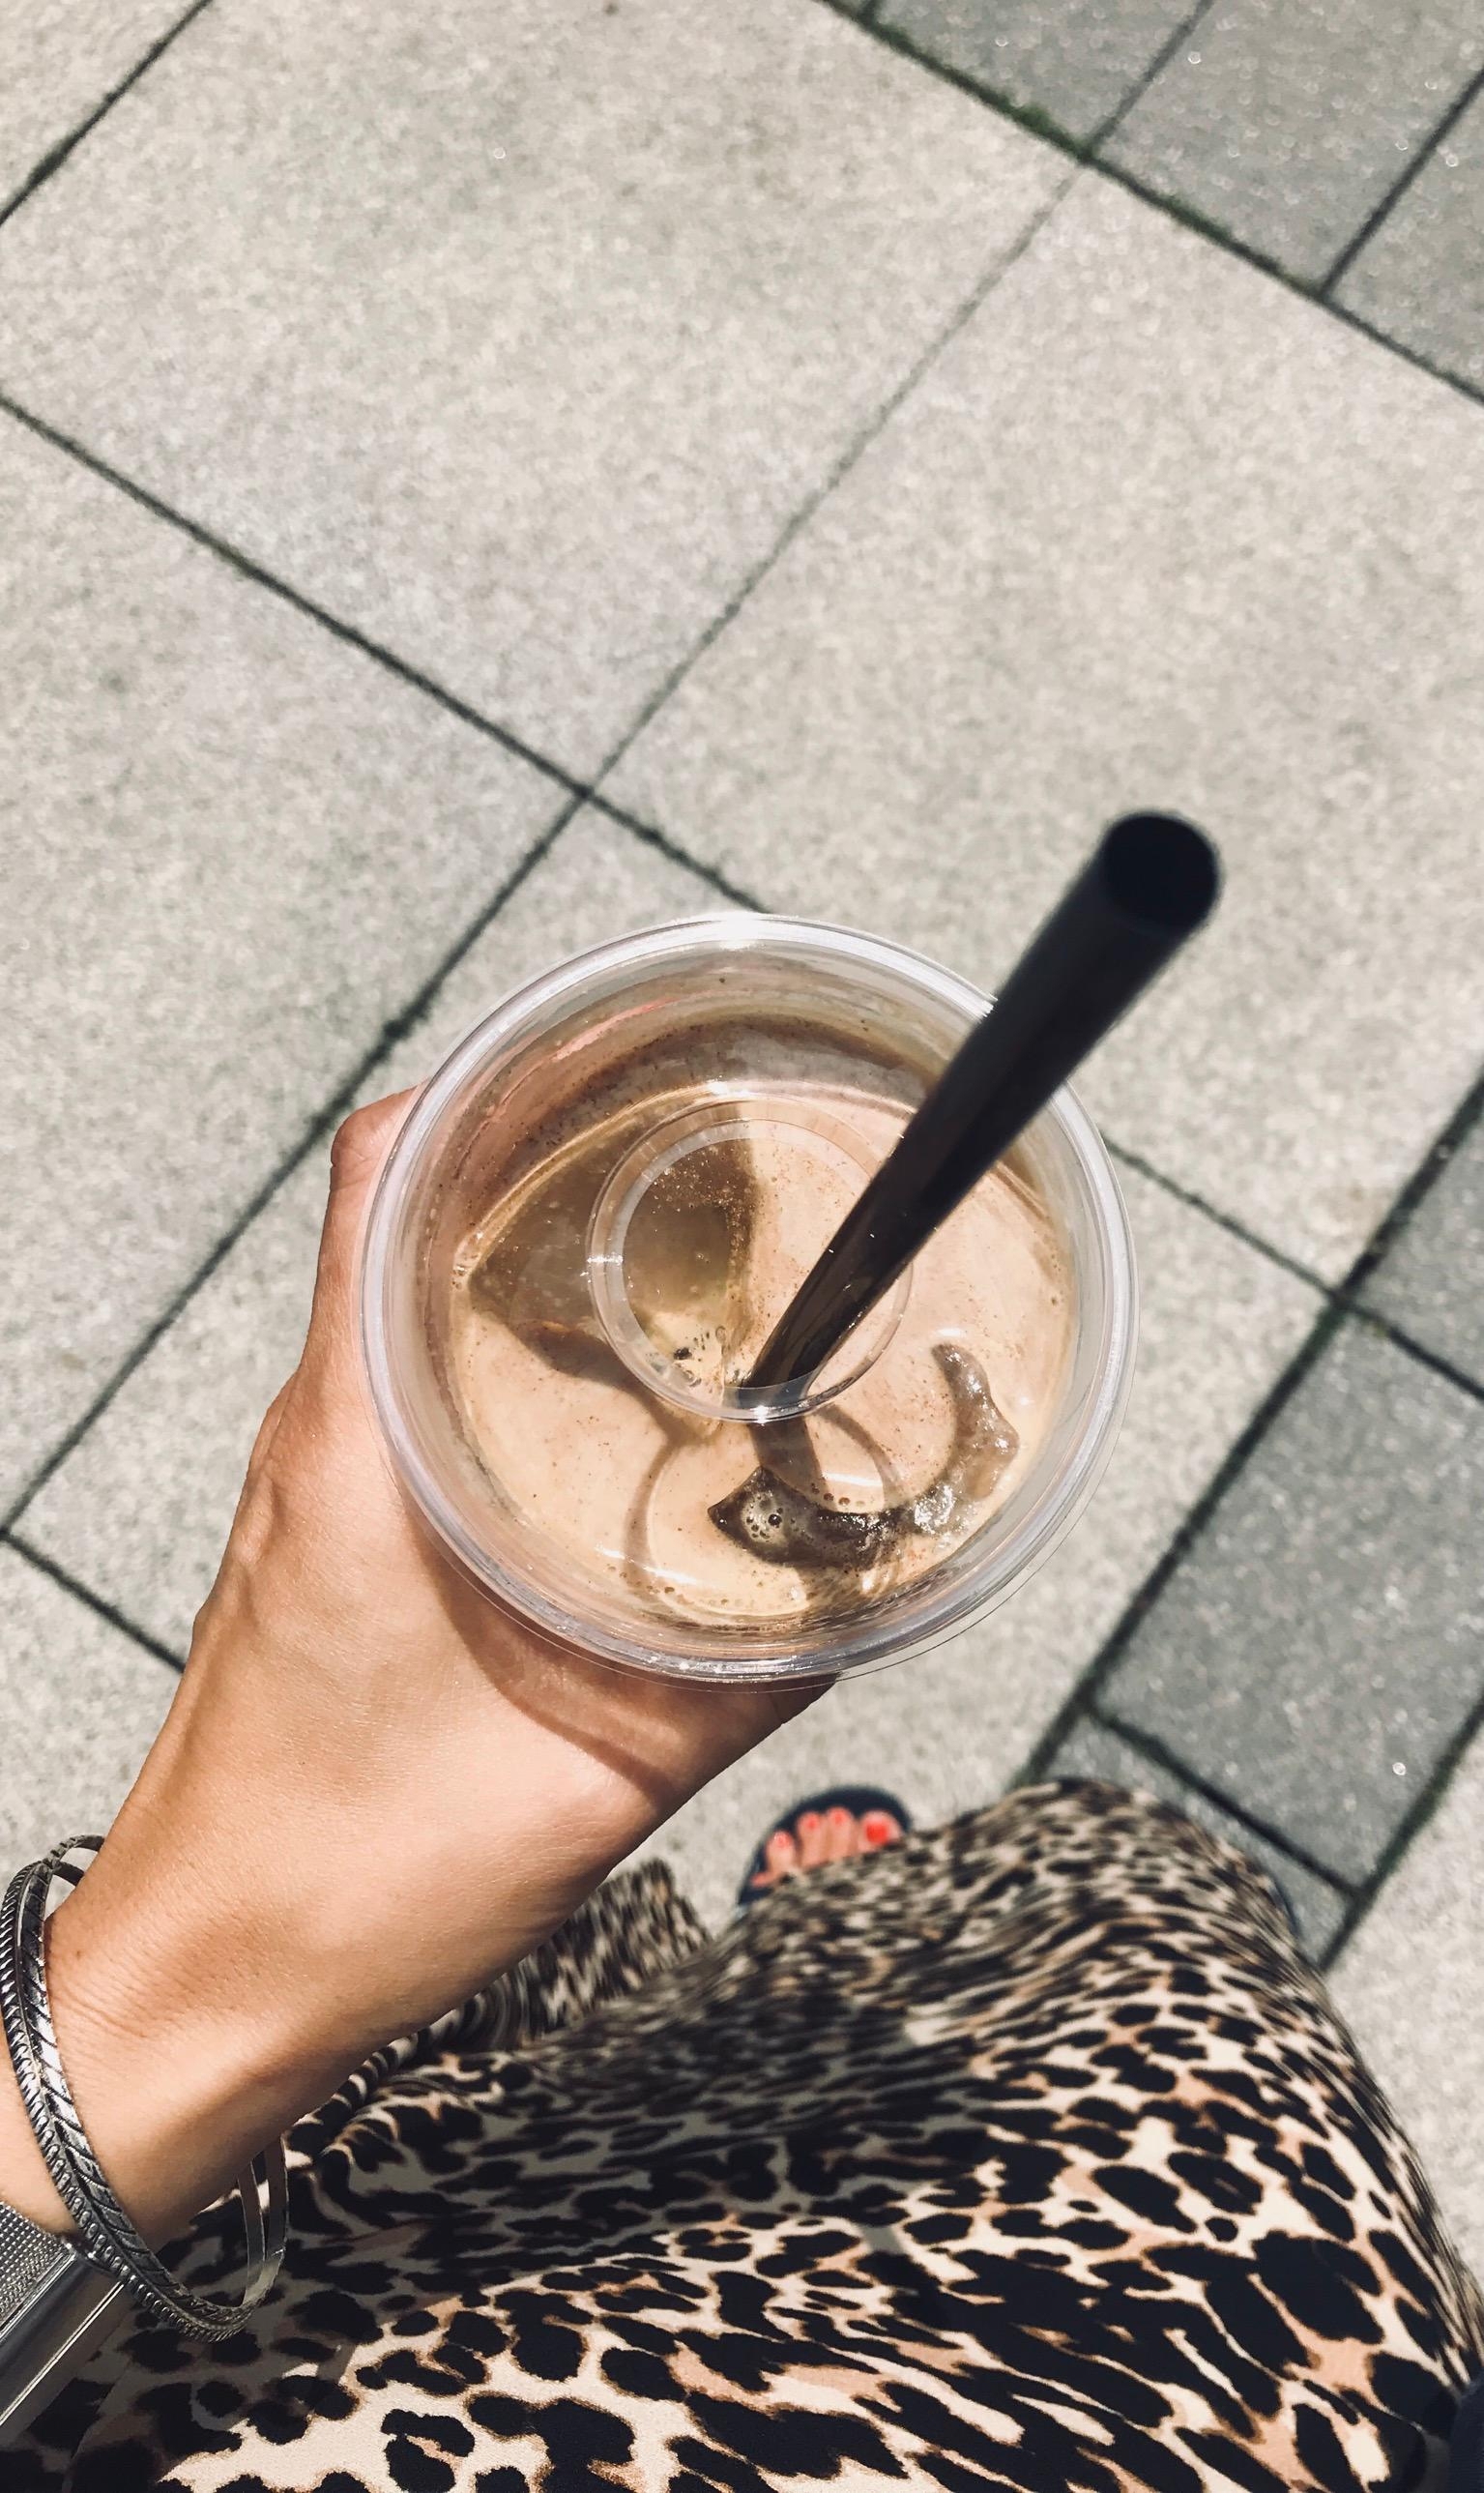 Sonne & Kaffee - die perfekte Kombi 🖤 #summervibes #butfirstcoffee #fromabove #coffeelover